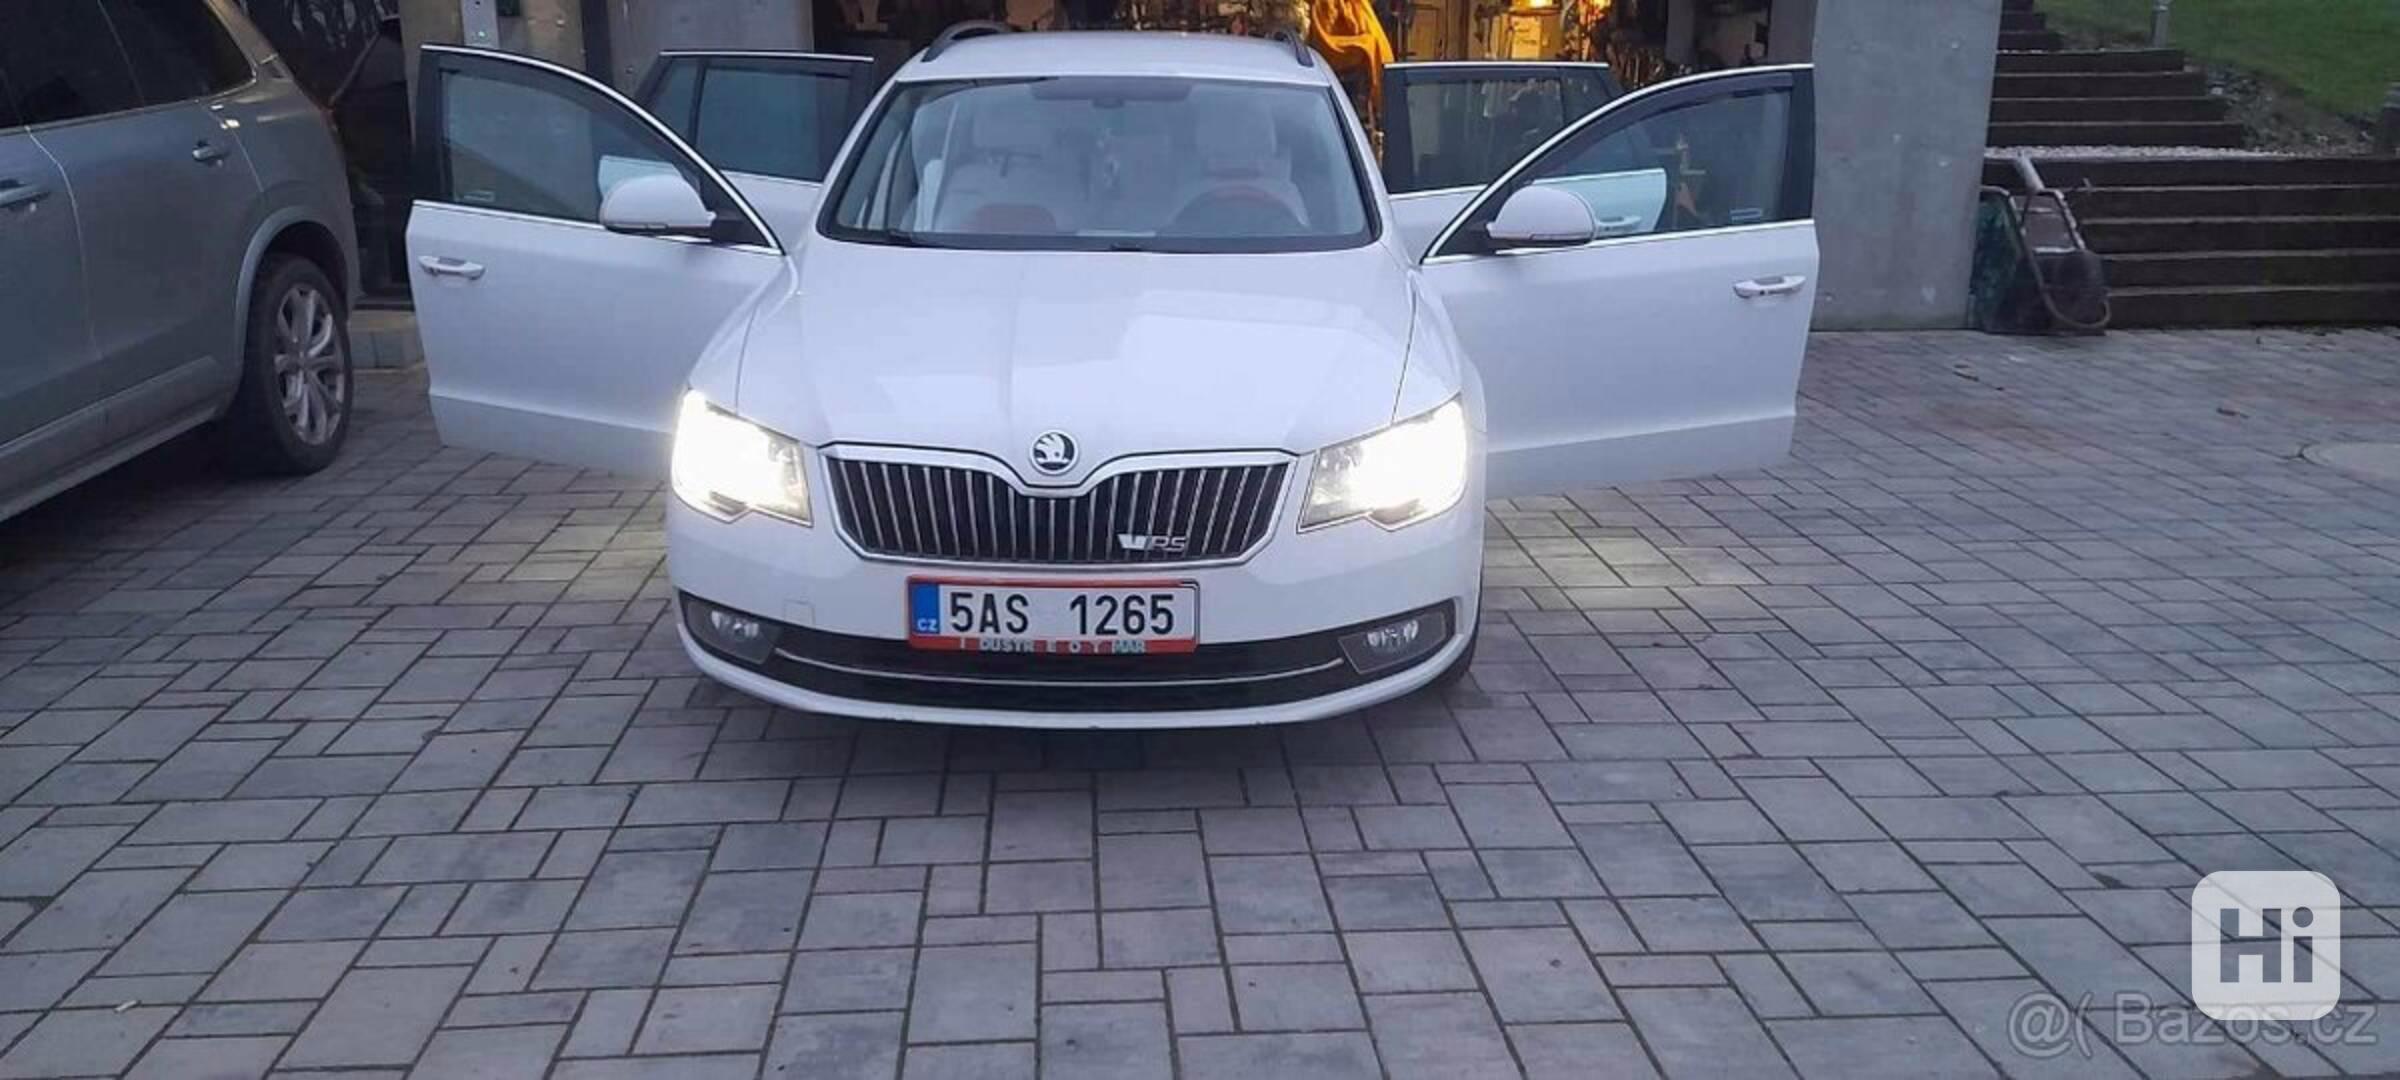 Škoda Superb, 2.0 TDI Kombi  - foto 1